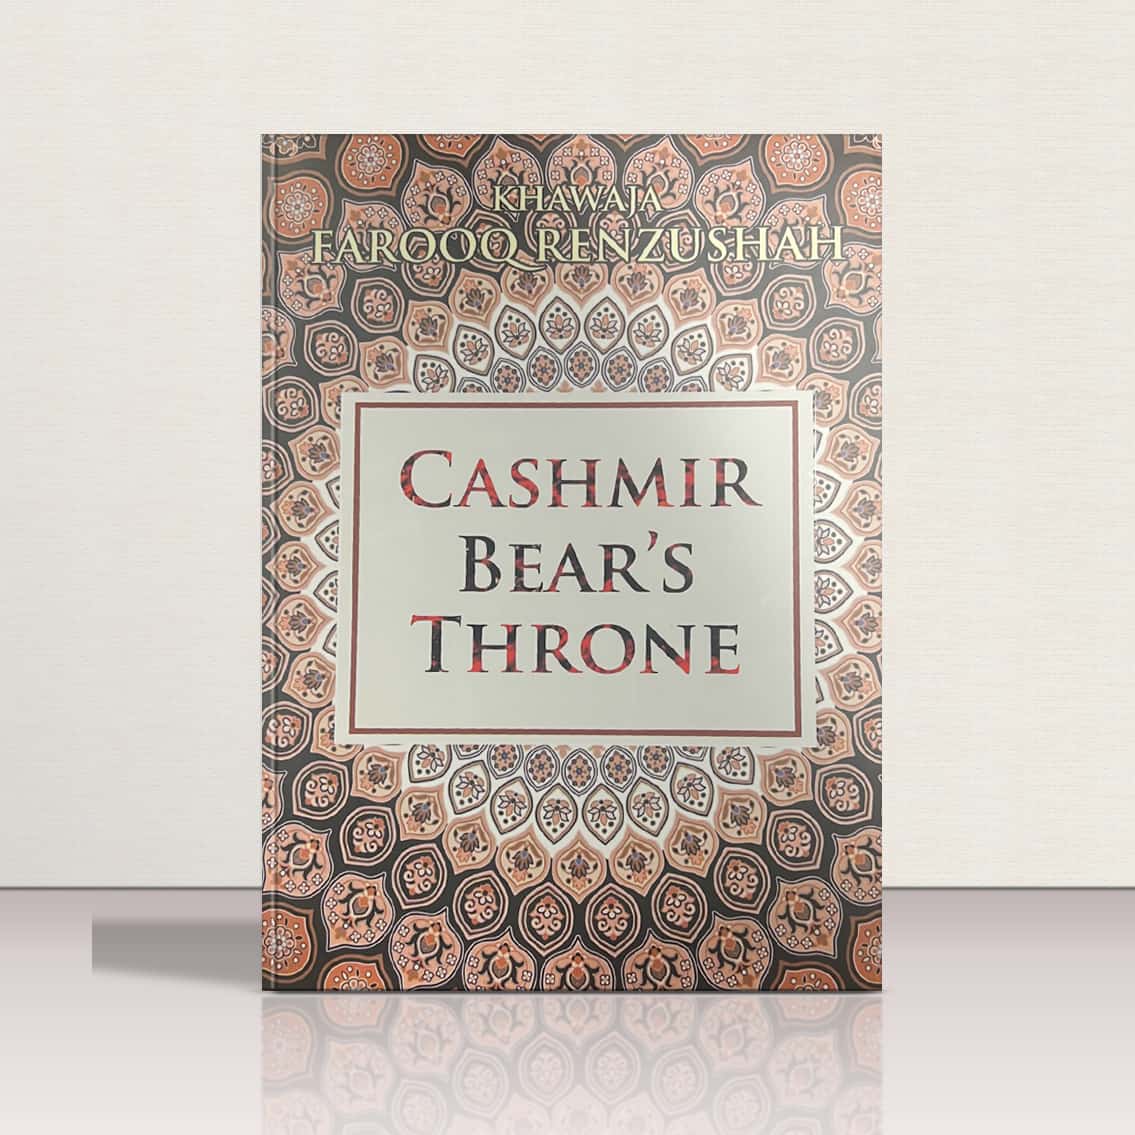 Cashmir Bear's Throne by Khawaja Farooq Renzushah